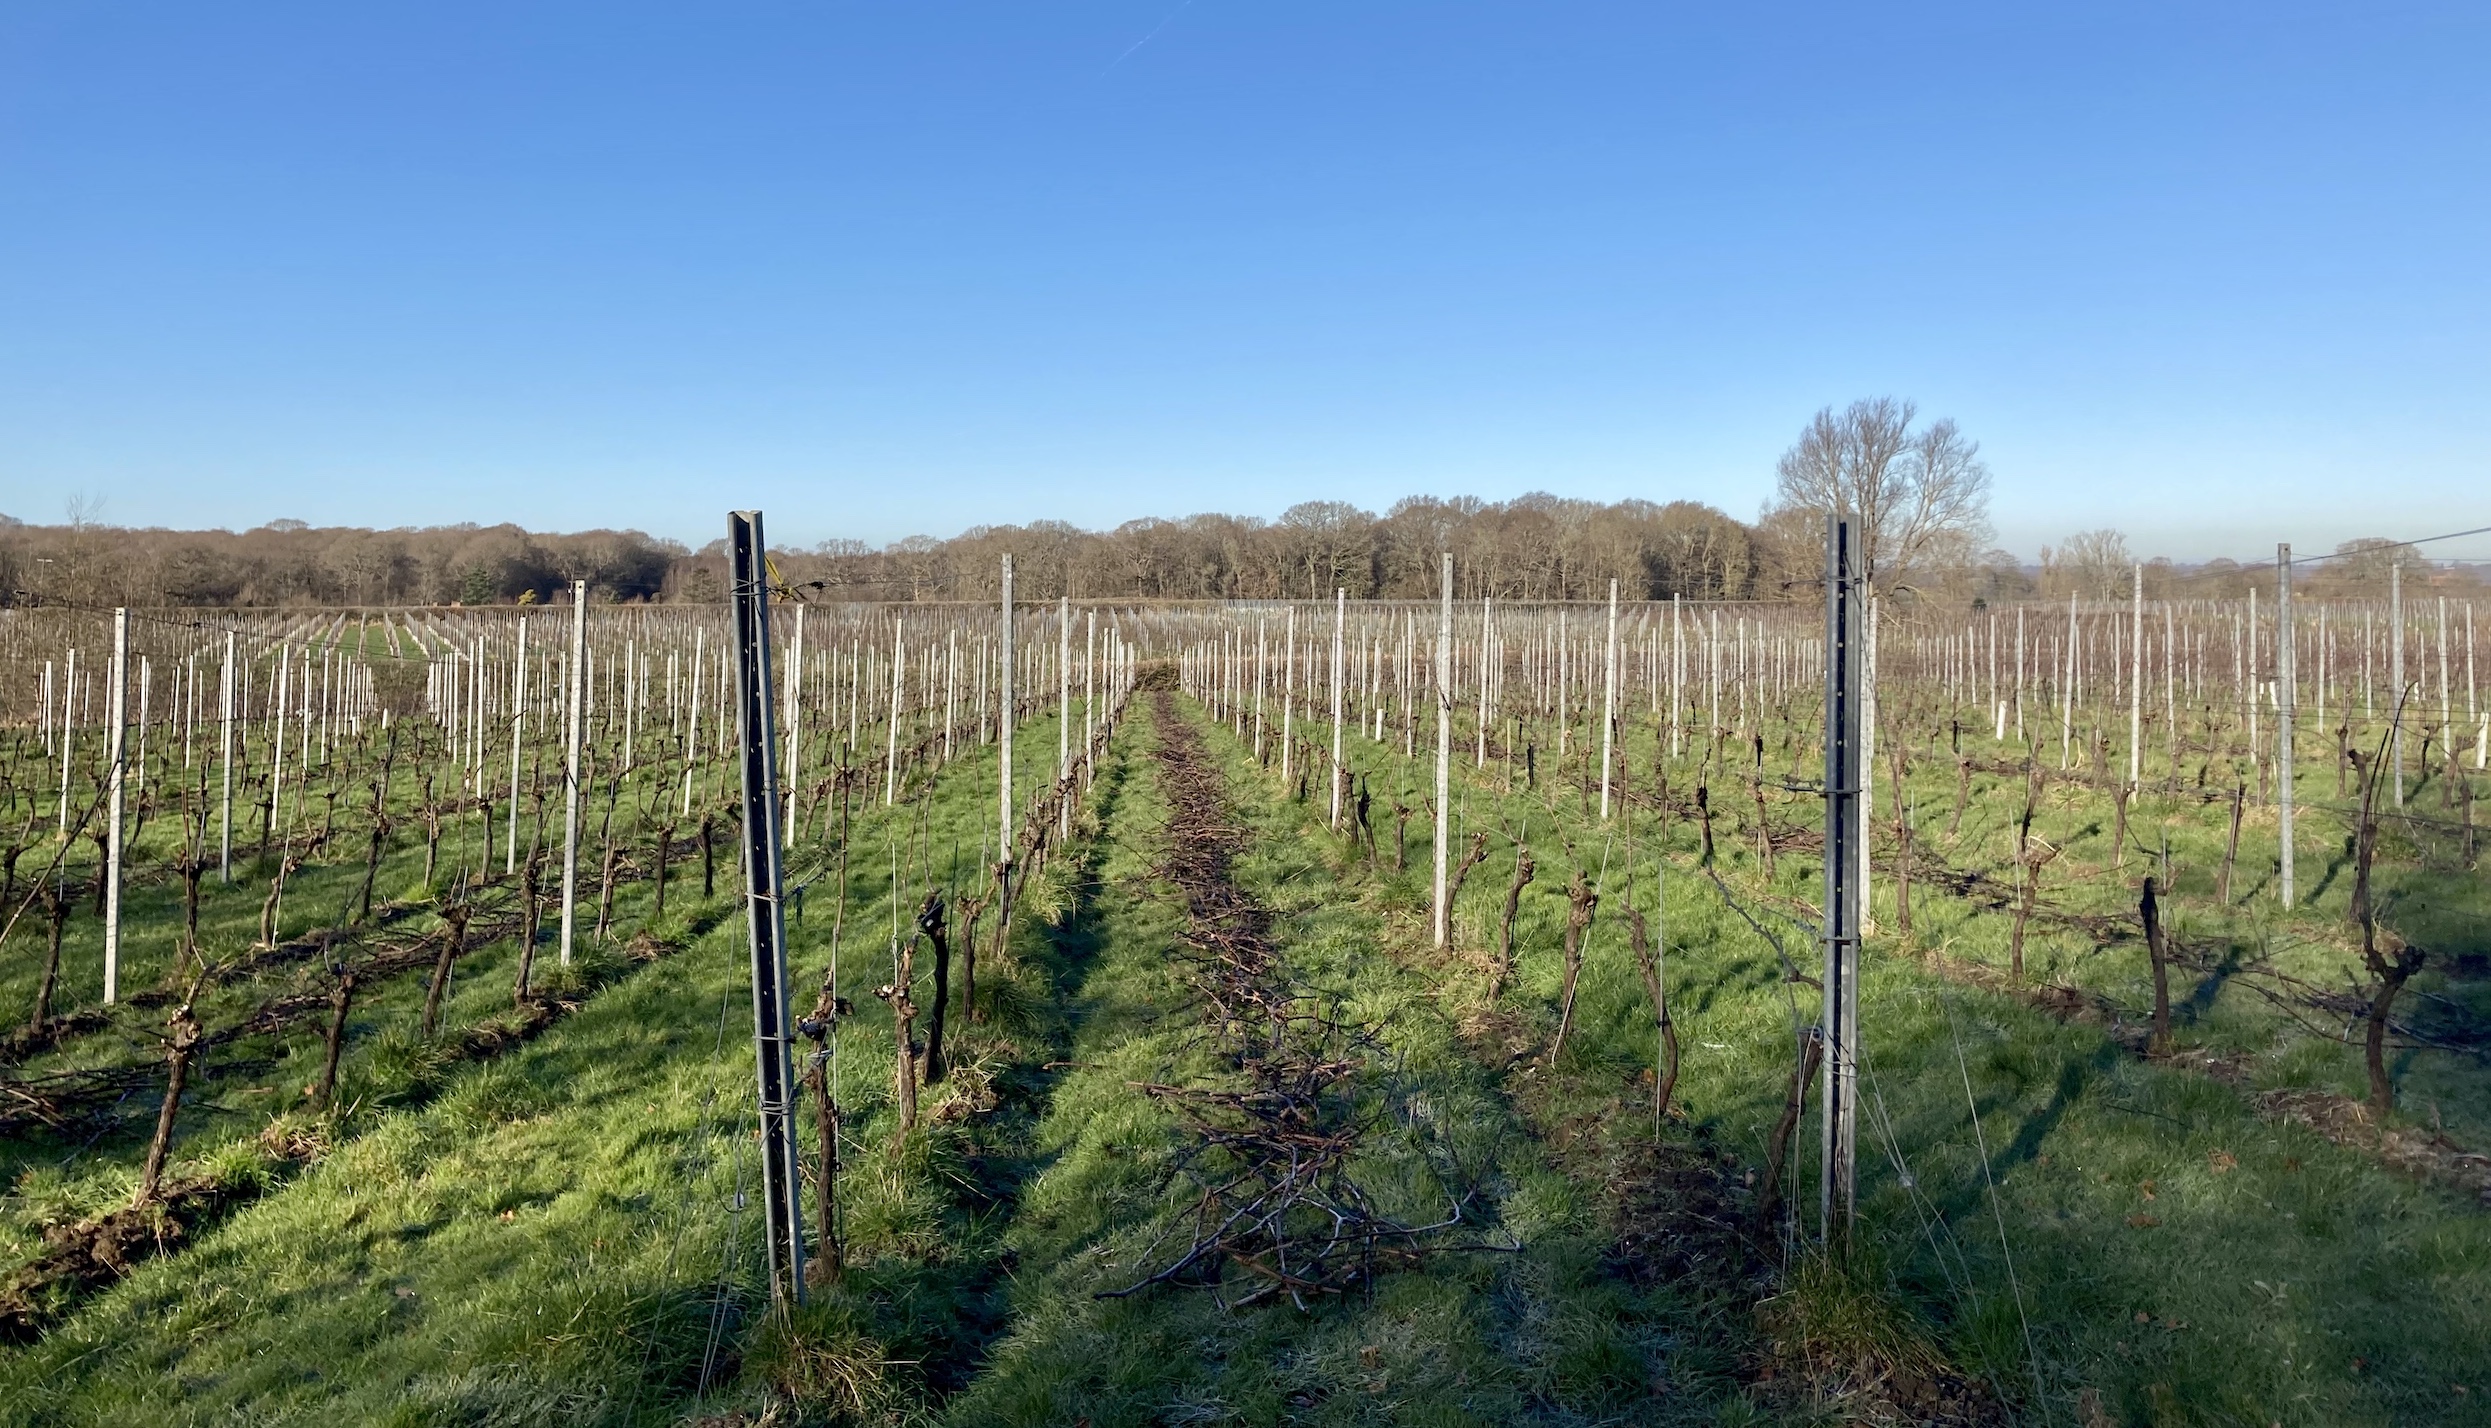 In the vineyard: The organic wonders of woodchip